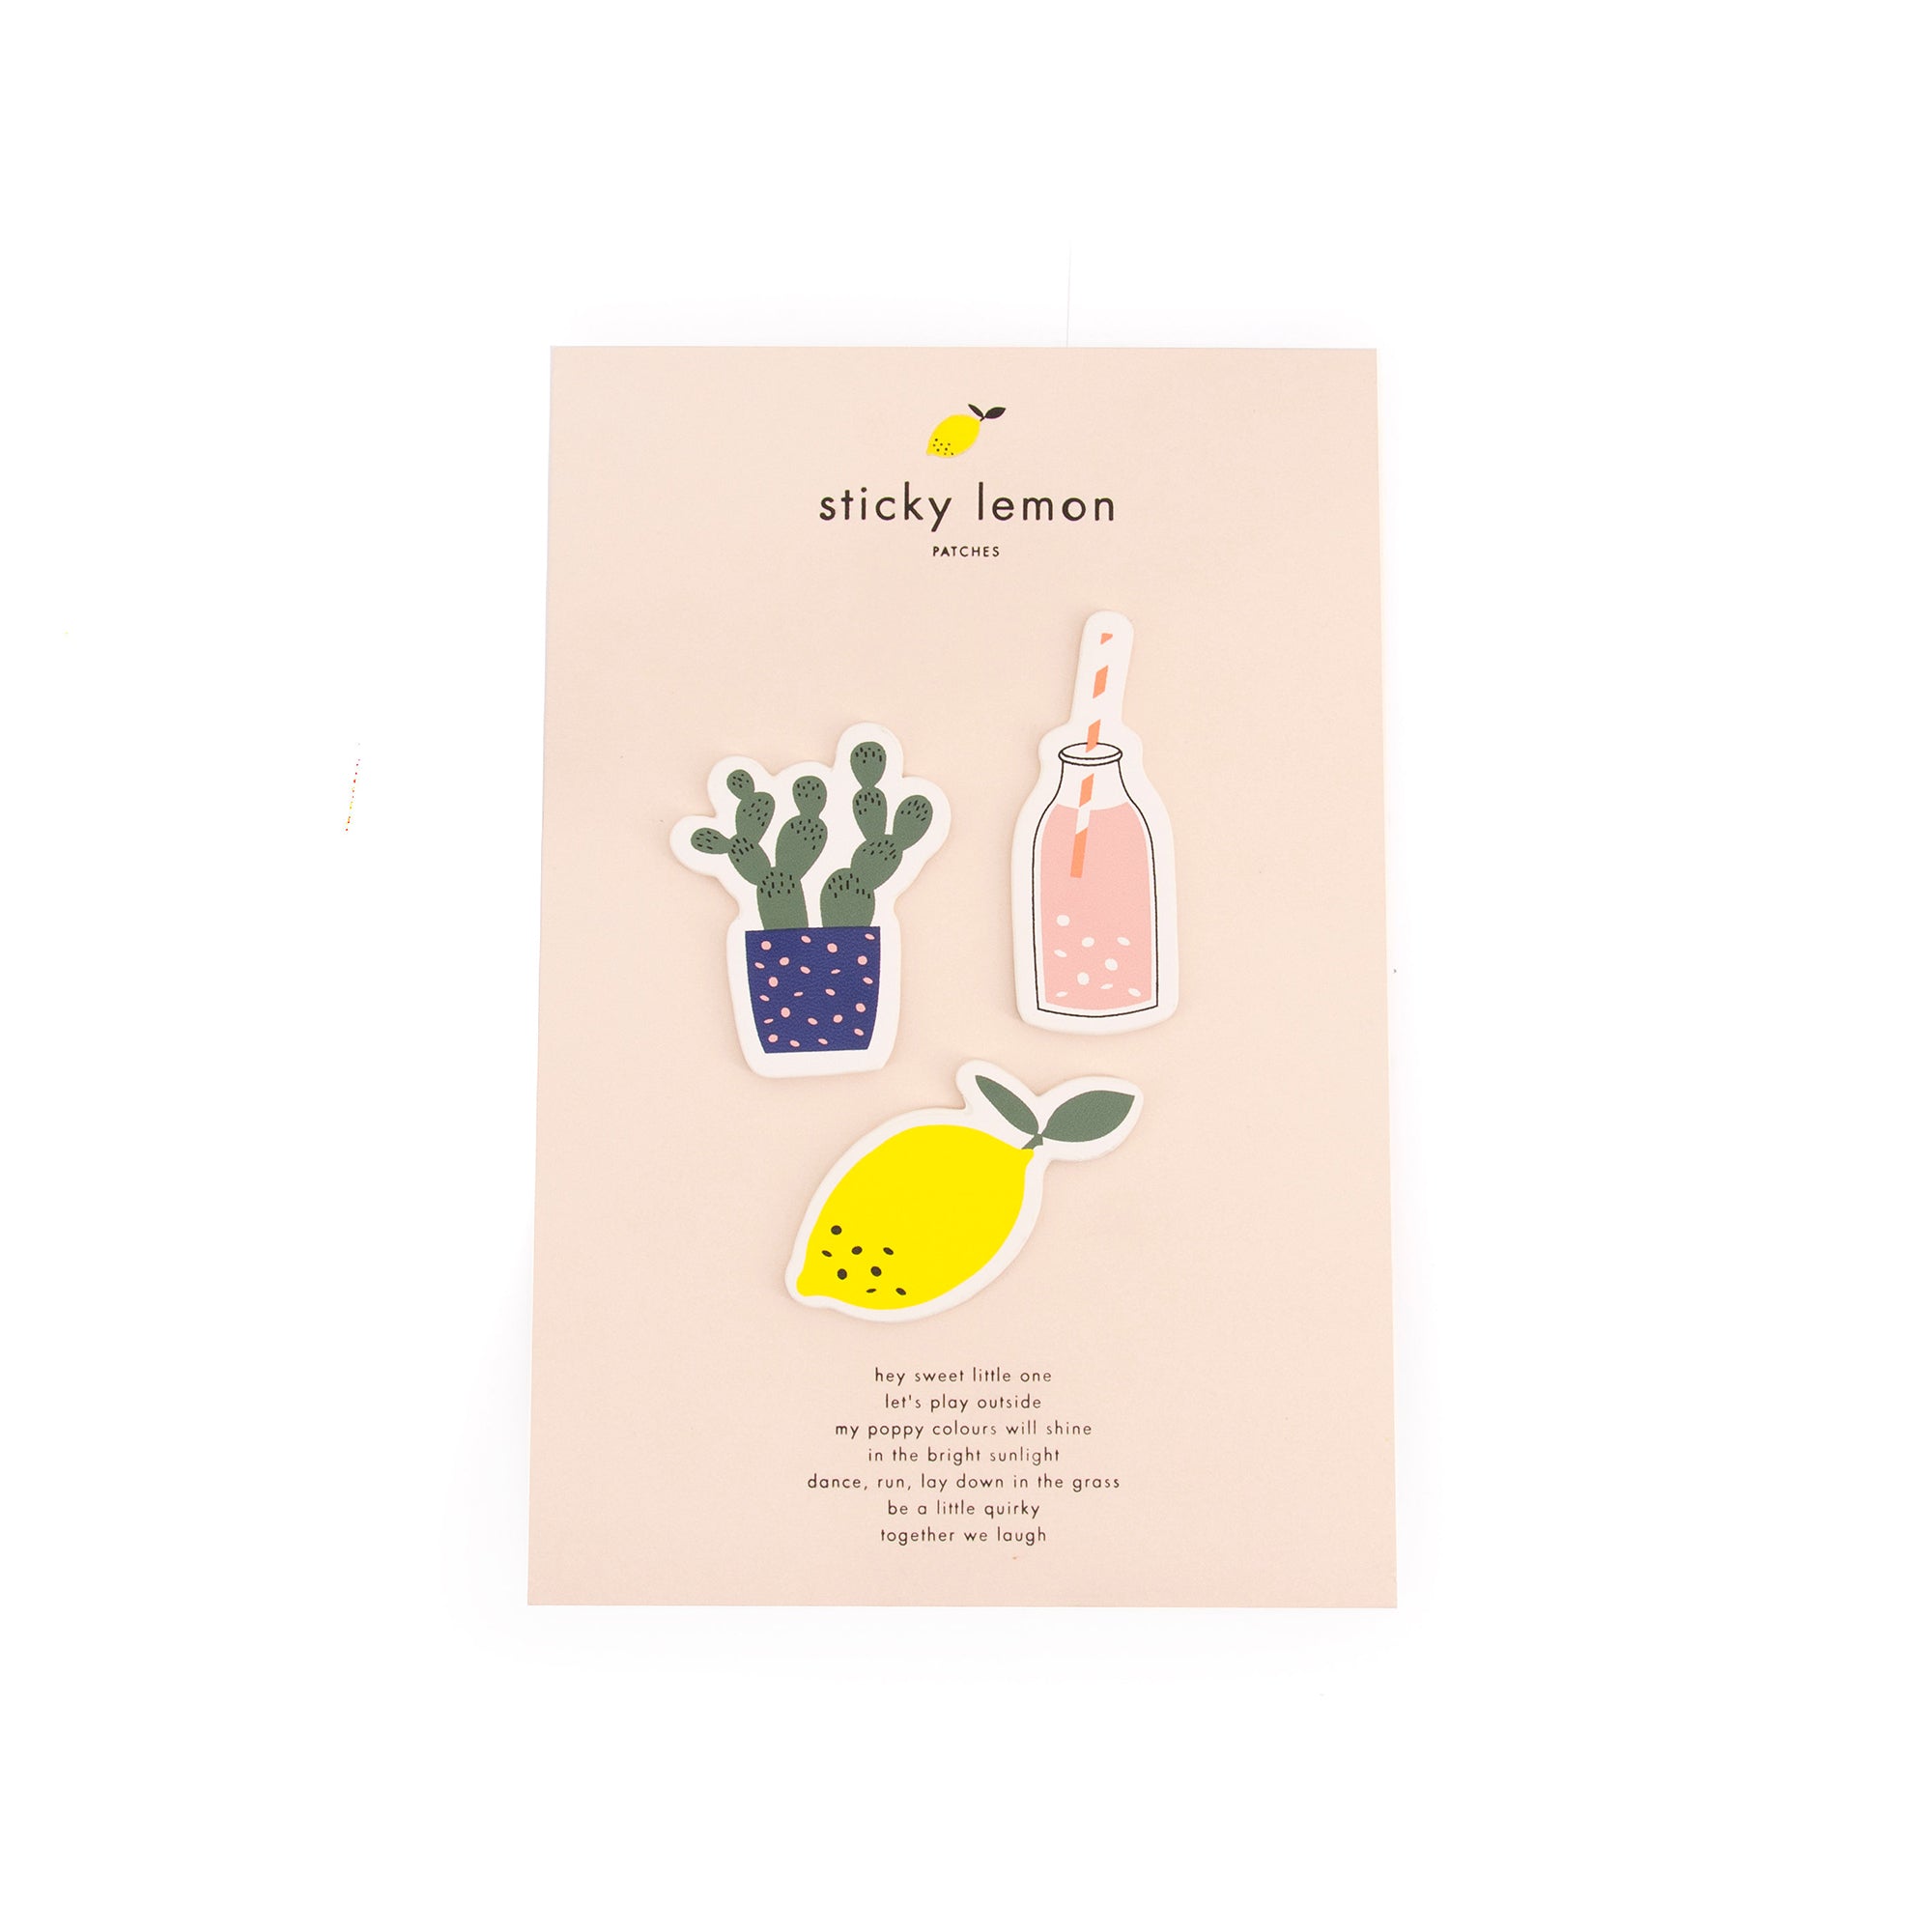 Patches Citron Cactus Bottle On A Card